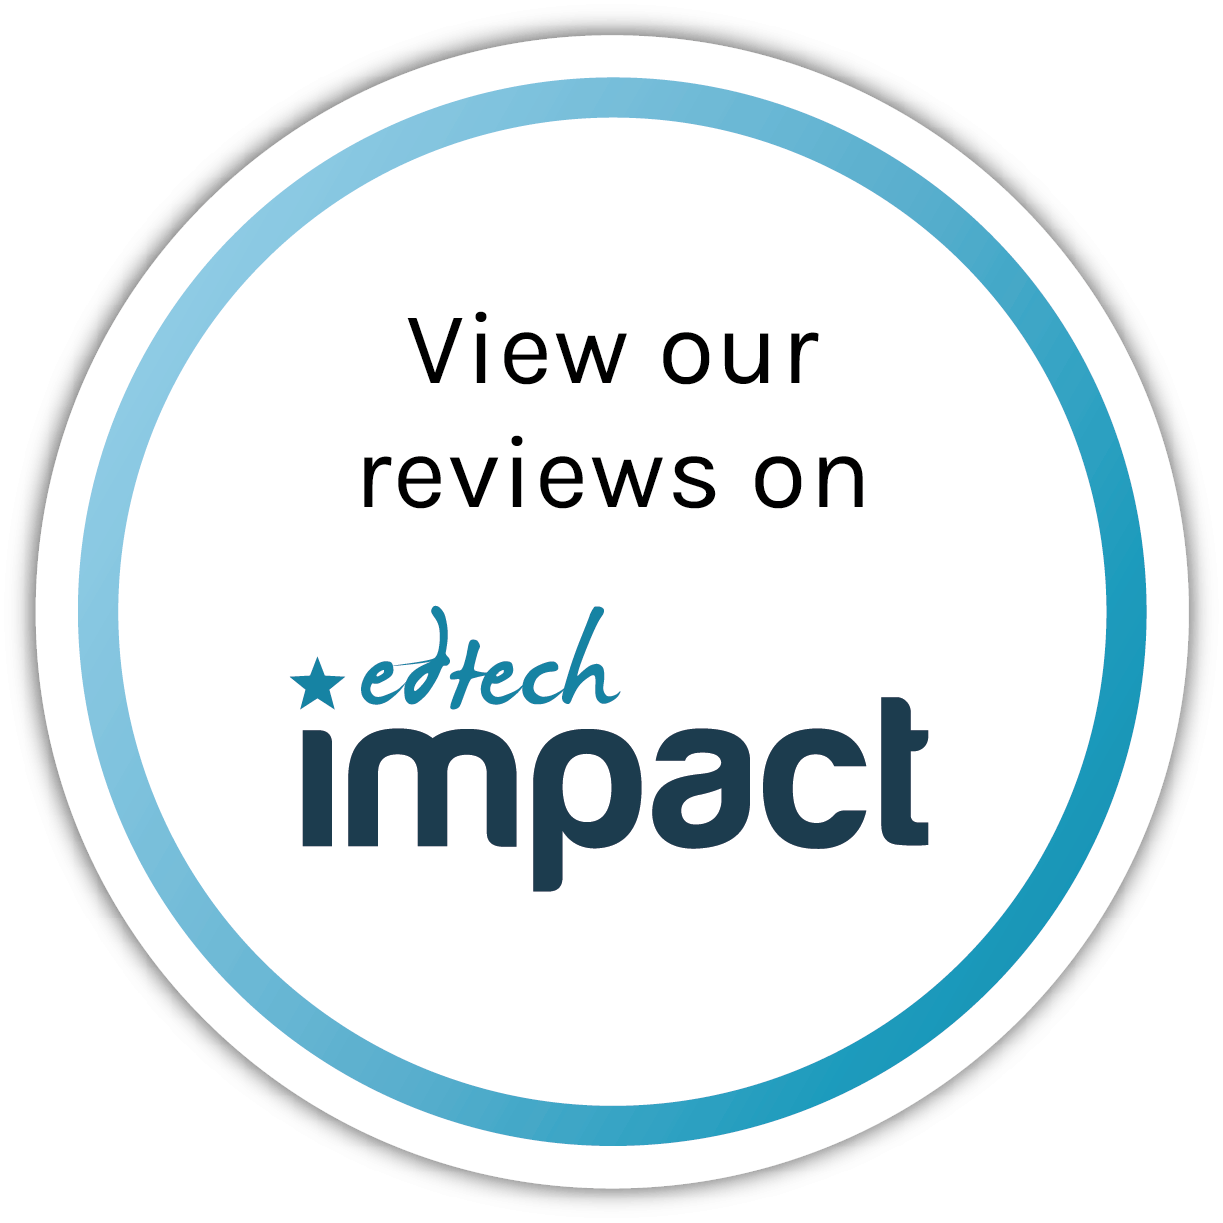 edtech impact reviews badge